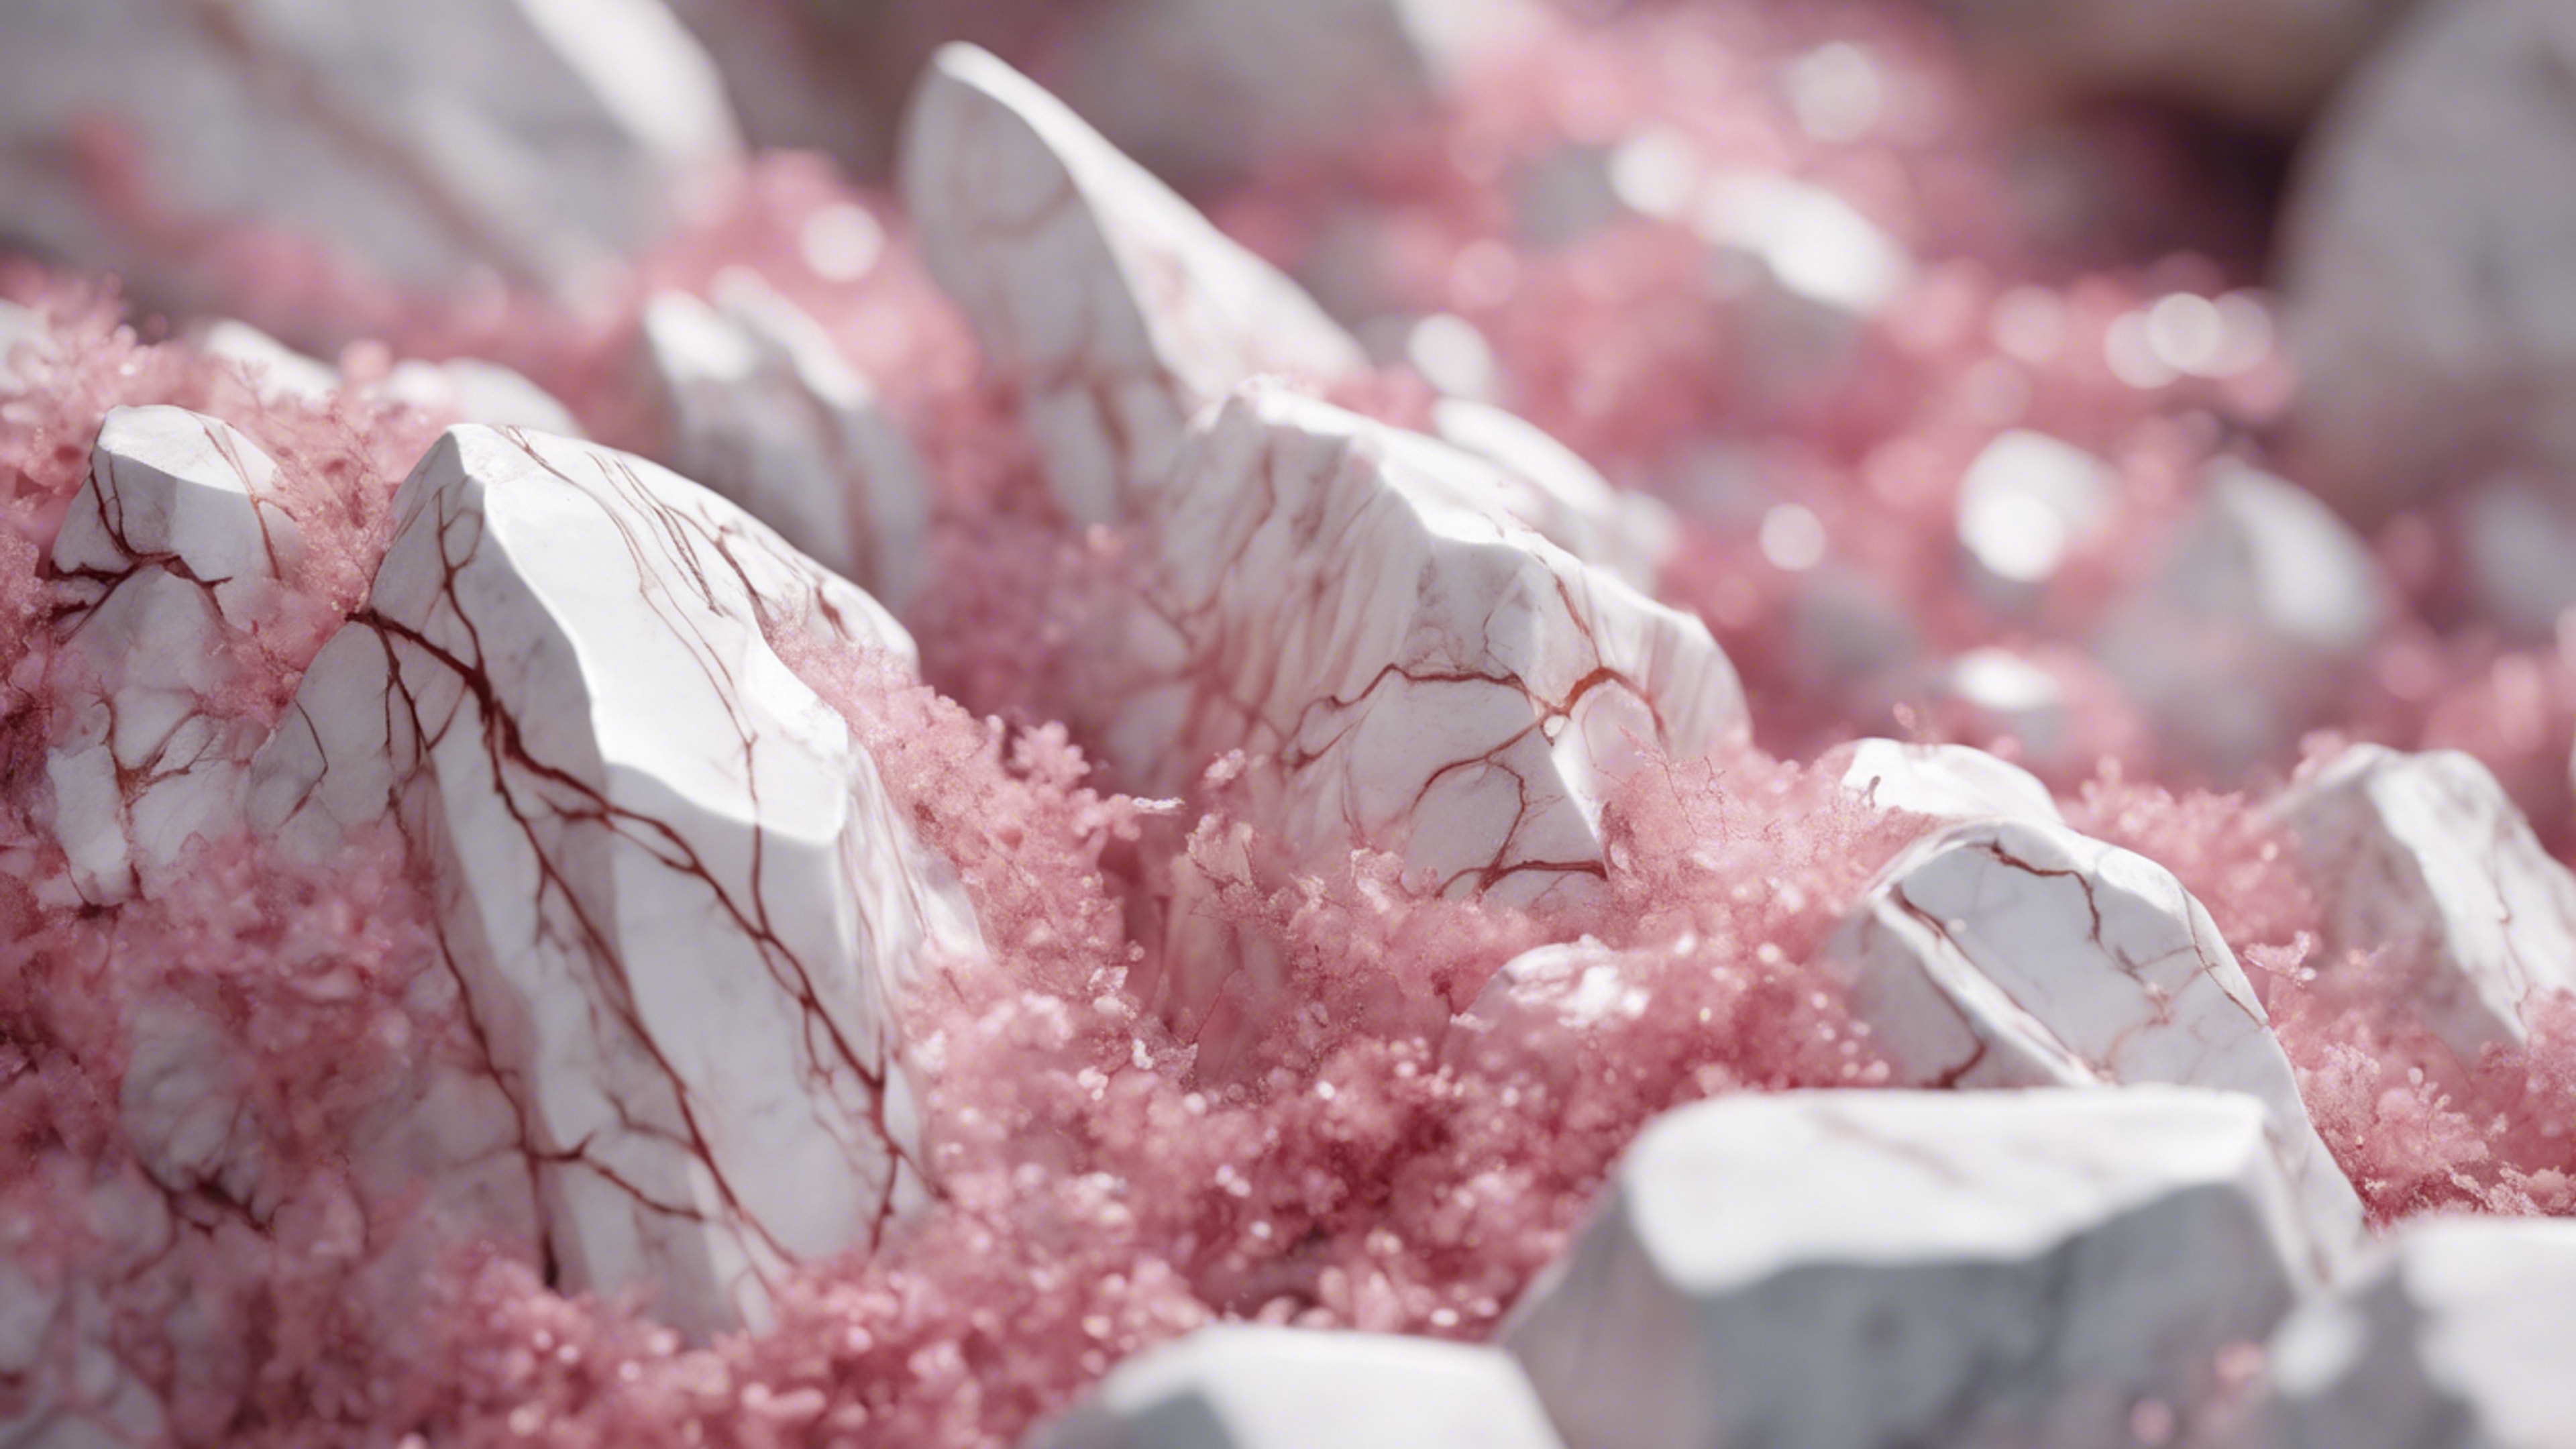 Pink and white veins running through marble rocks. ផ្ទាំង​រូបភាព[3dd5ab4ab8a944e2820c]